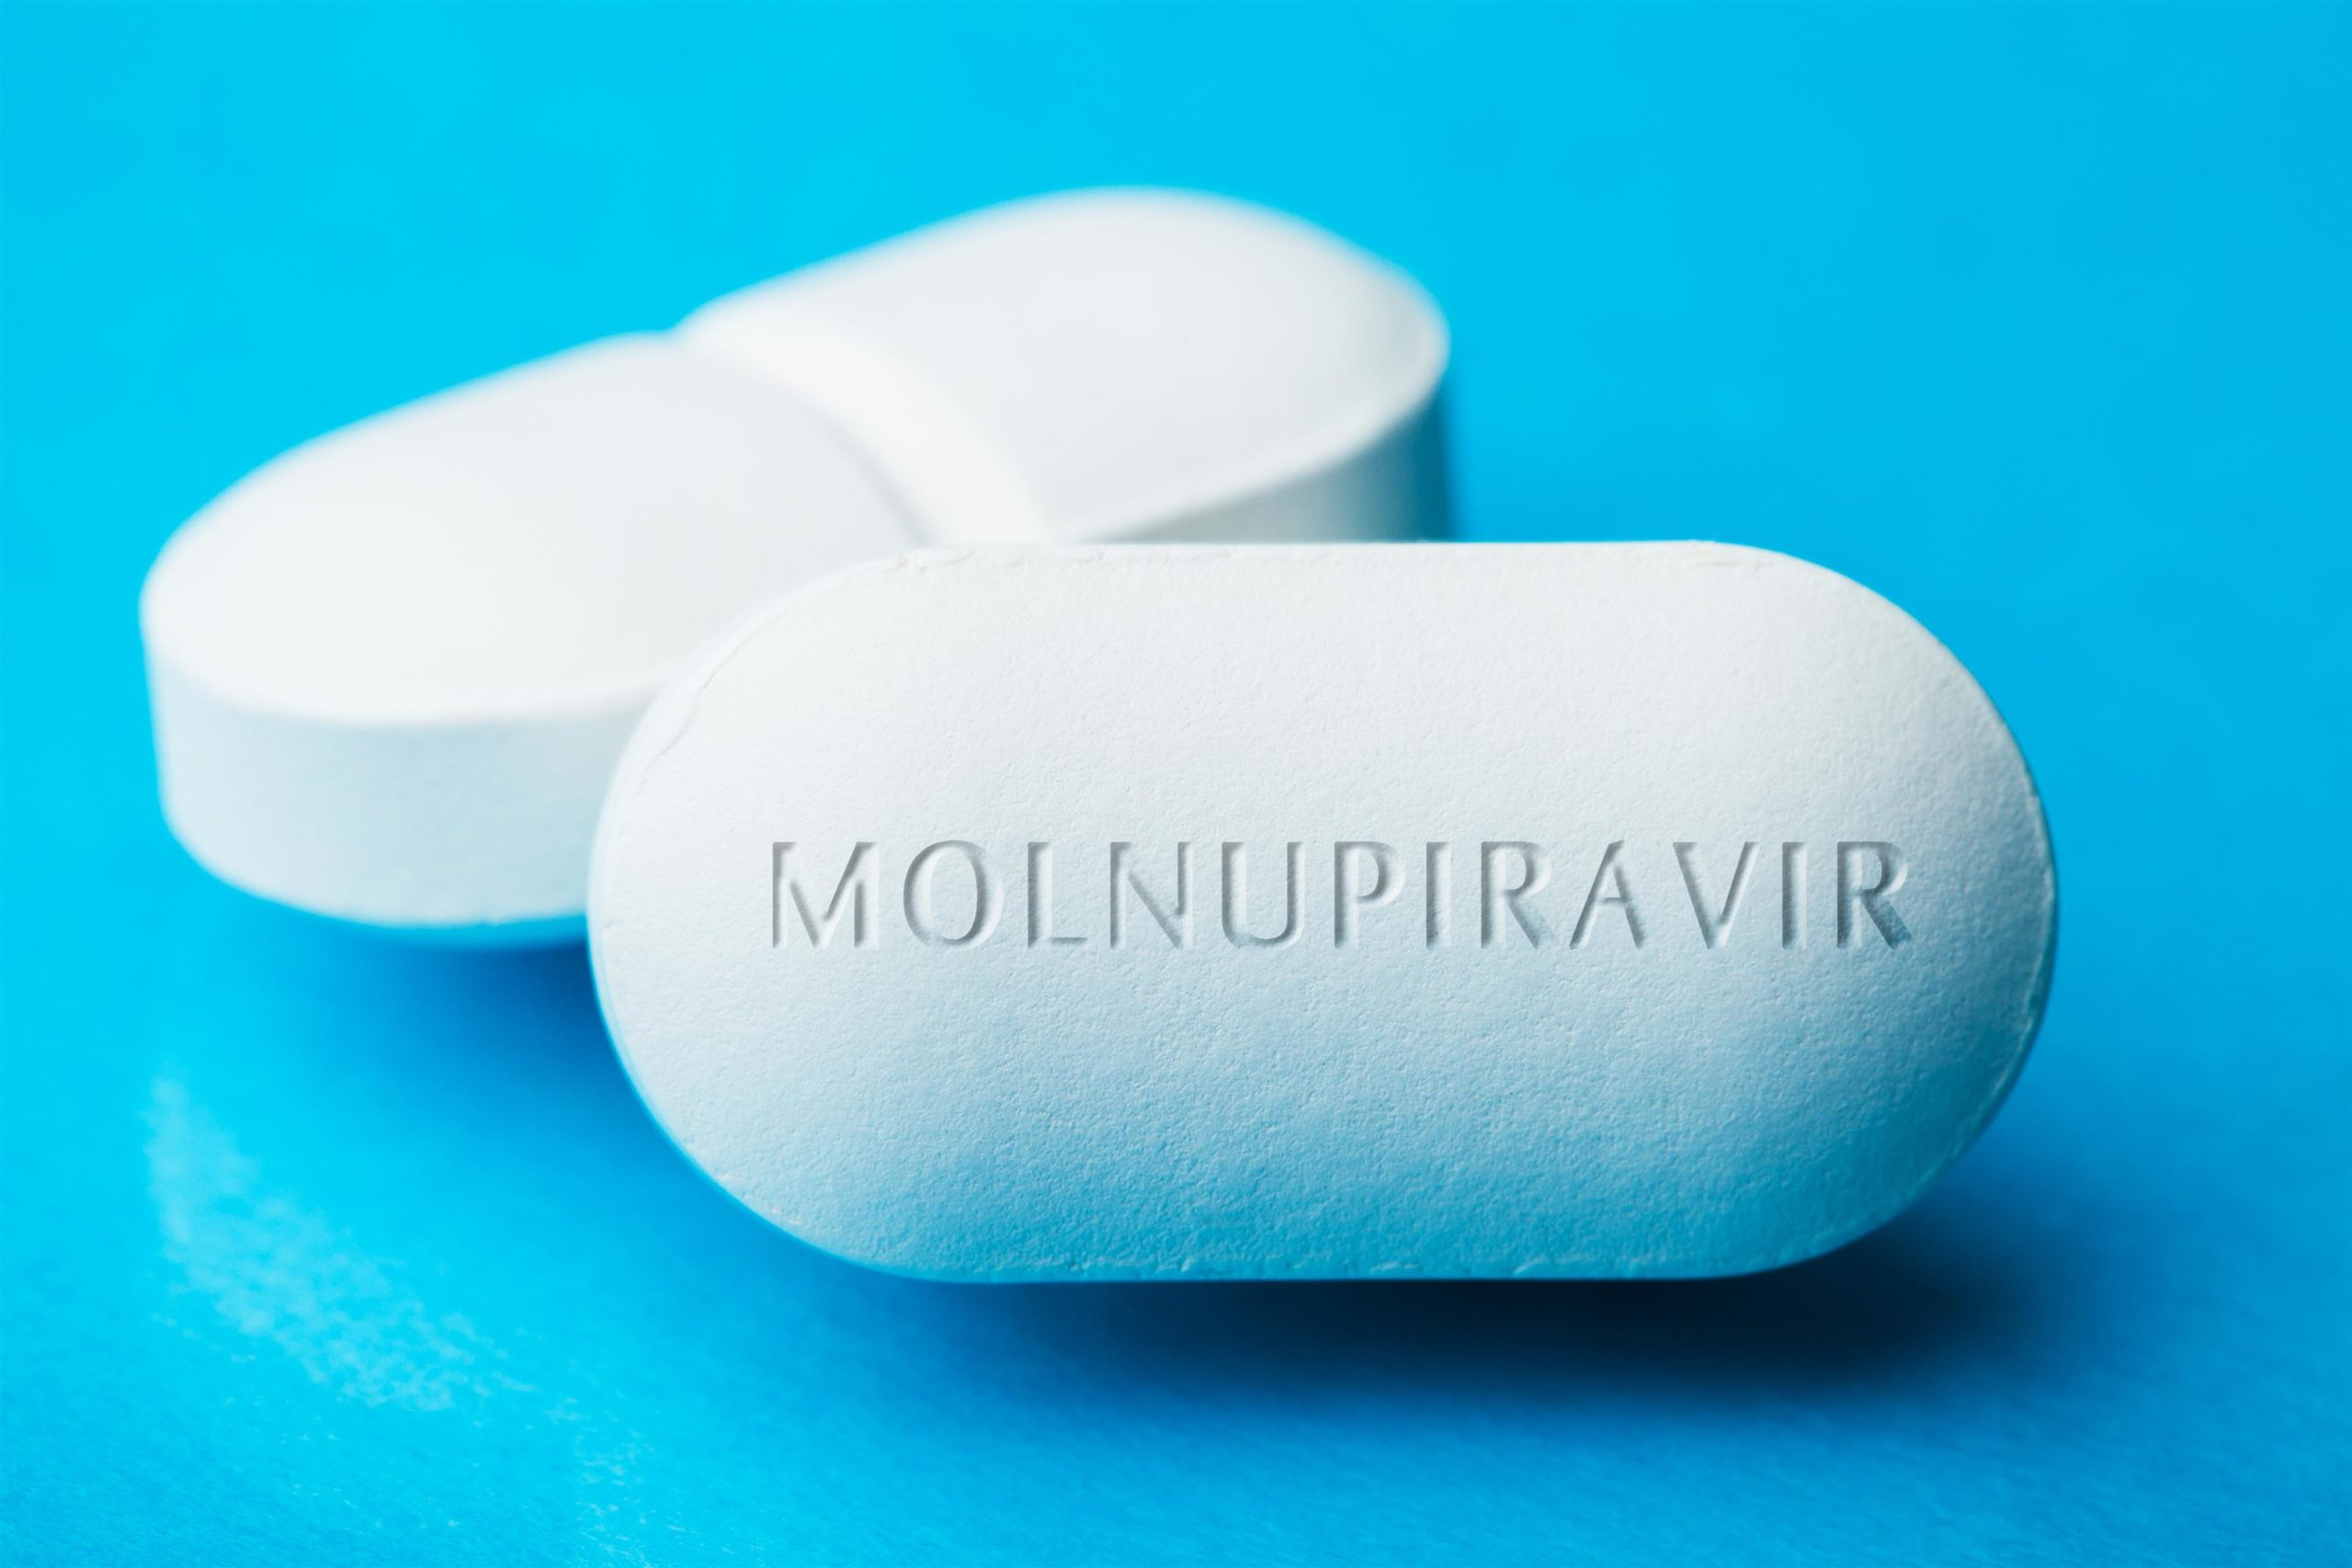 Минздрав подписал соглашение о закупке лекарства «Молнупиравир» от коронавируса